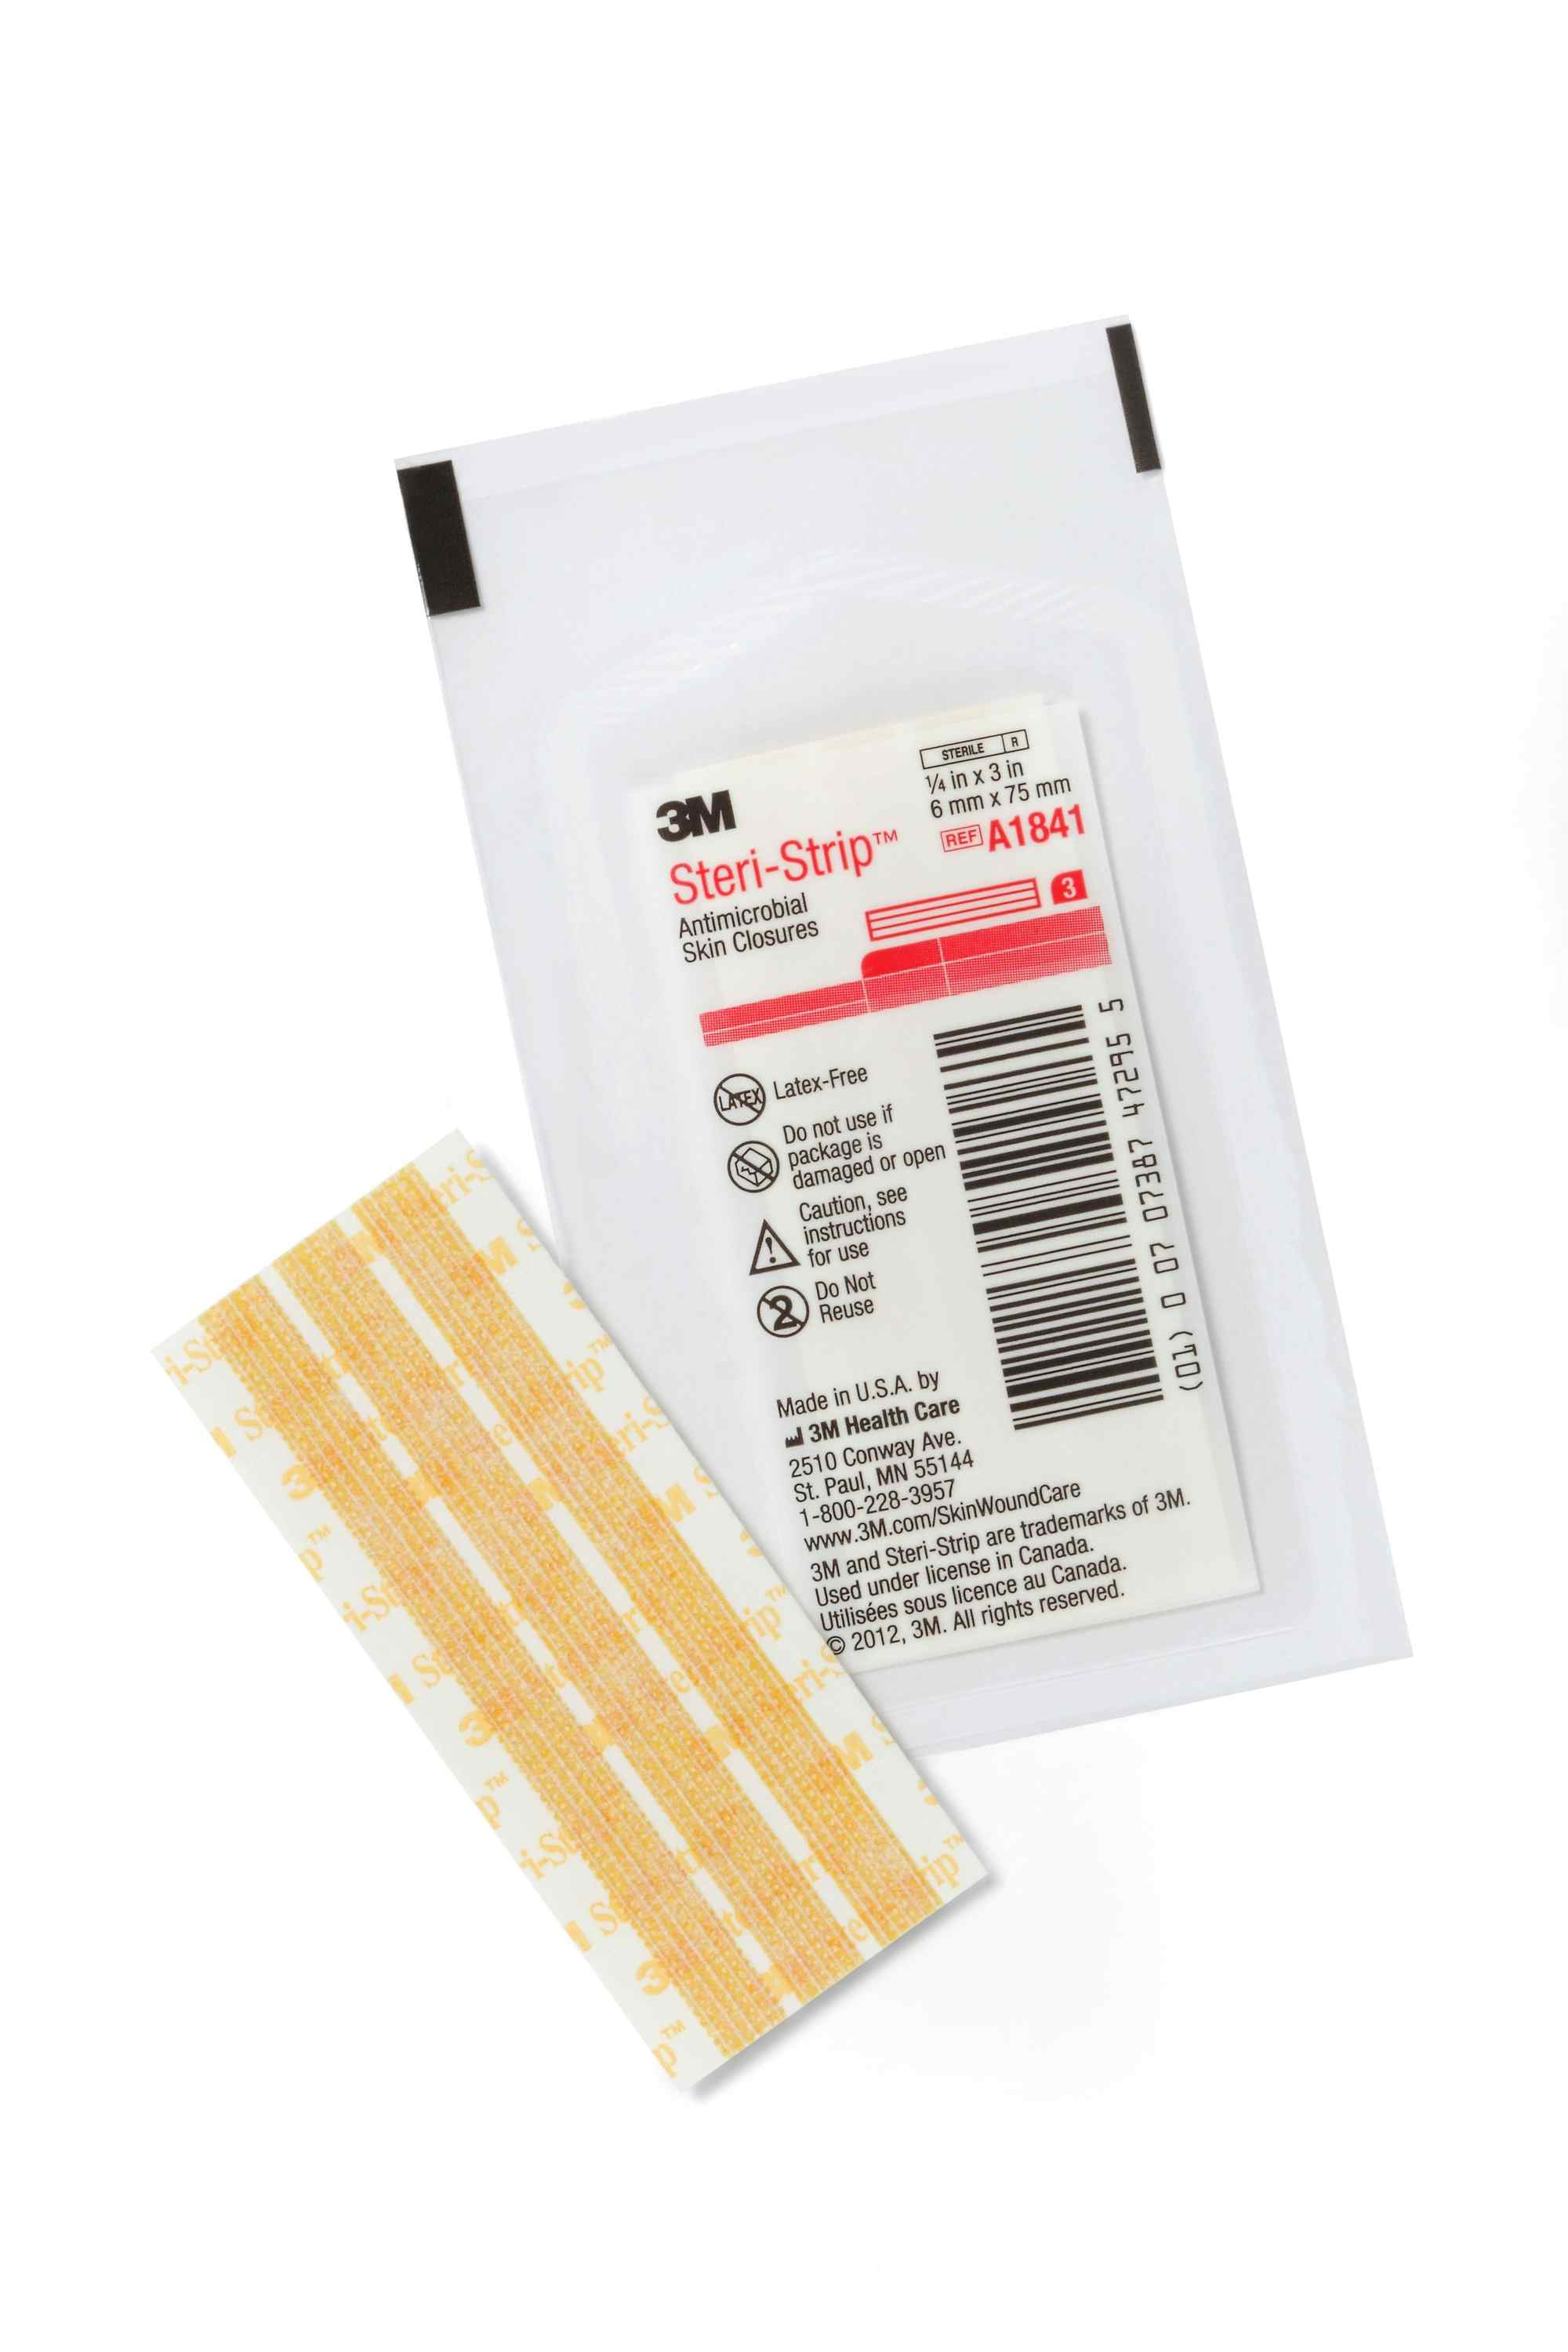 3M Steri-Strip Antimicrobial Skin Closures, 0.25 X 3", A1841, Box of 50